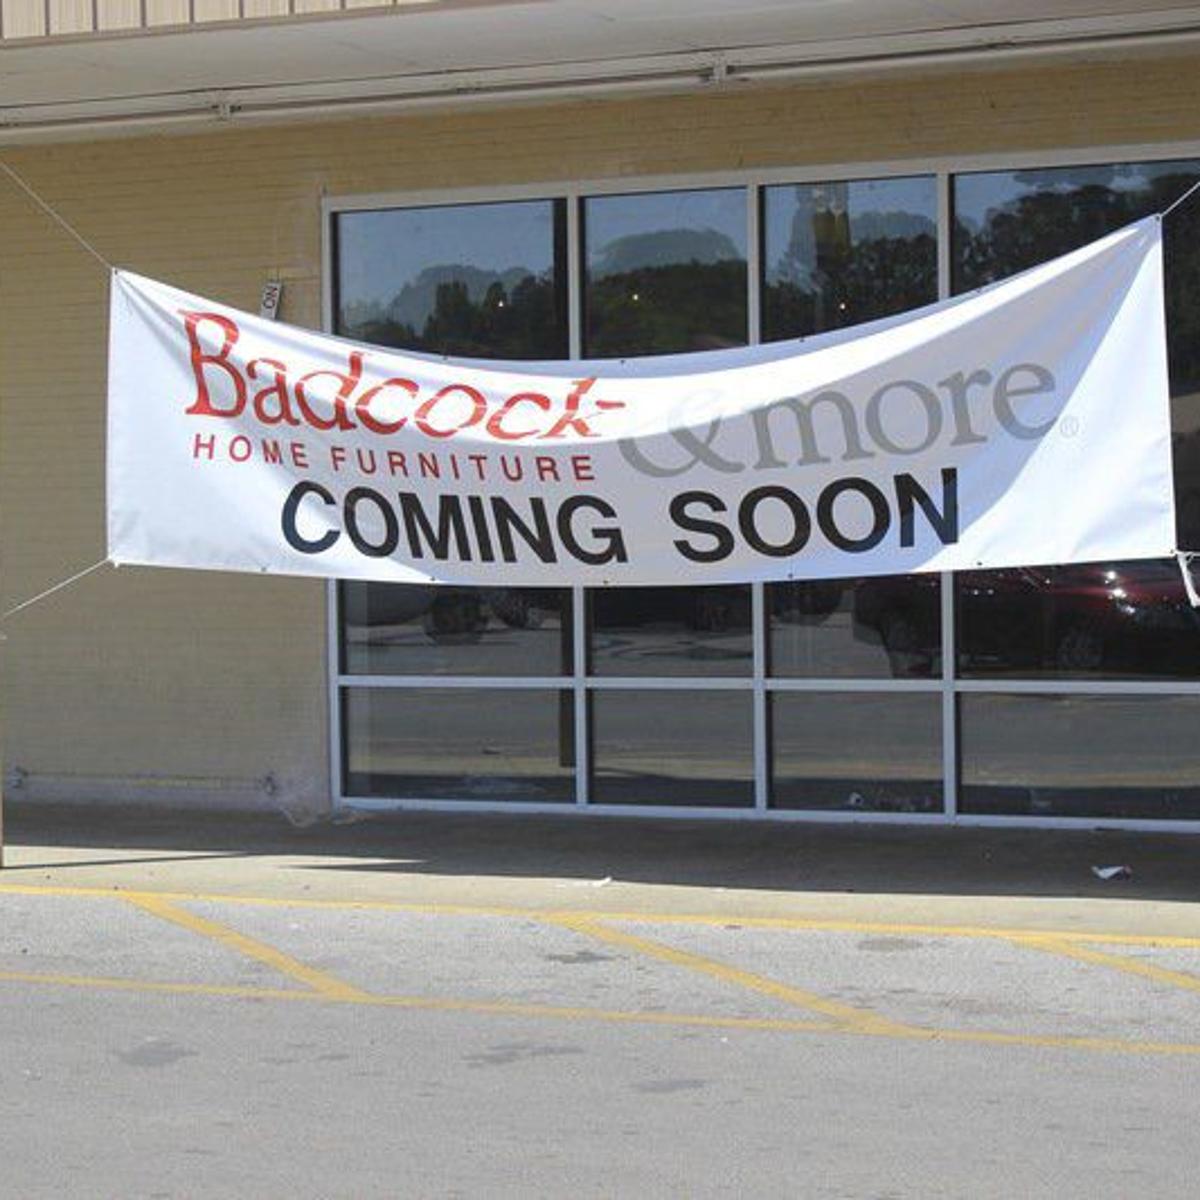 Badcock Furniture Plans June Opening In Meridian Local News